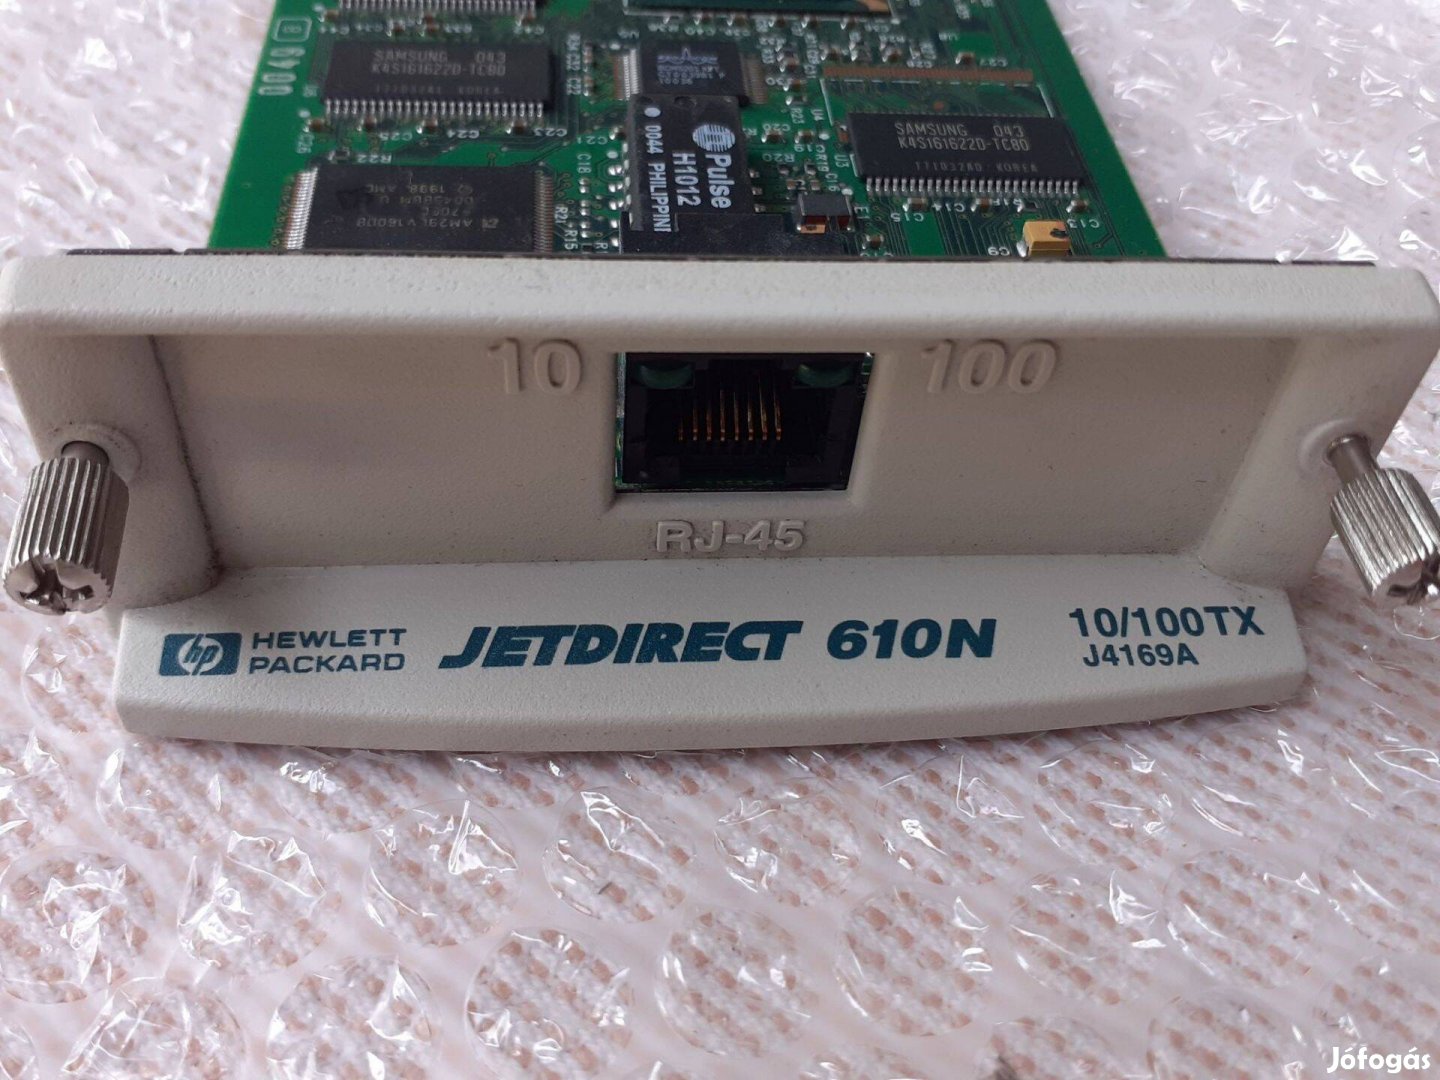 HP Jetdirect 610N Ethernet Network Card (J4169A)